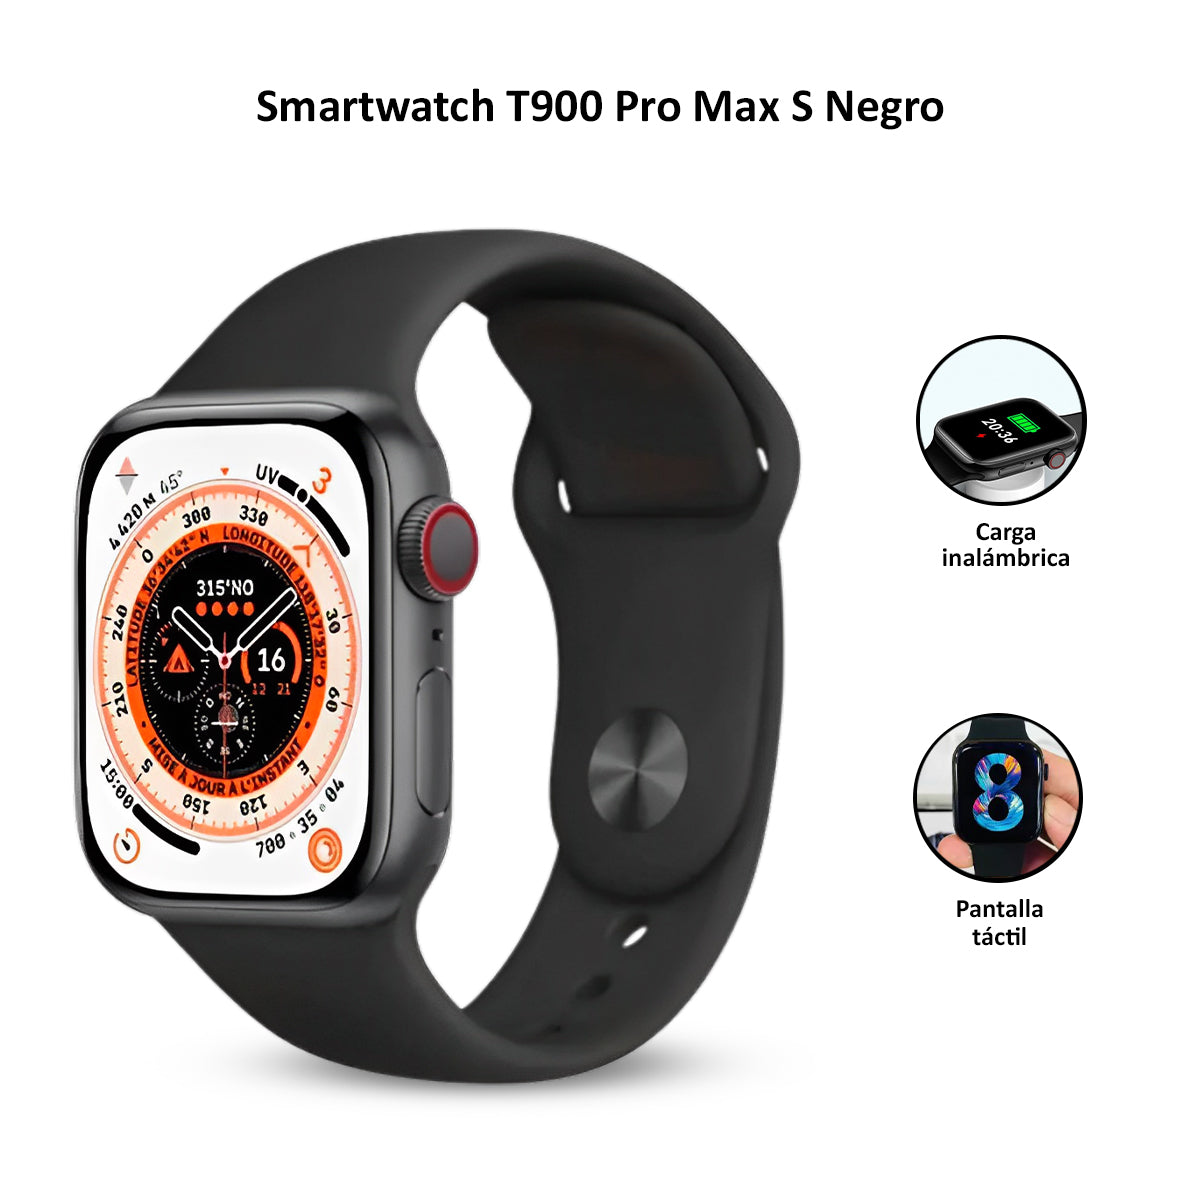 Smartwatch T900 Pro Max S Negro